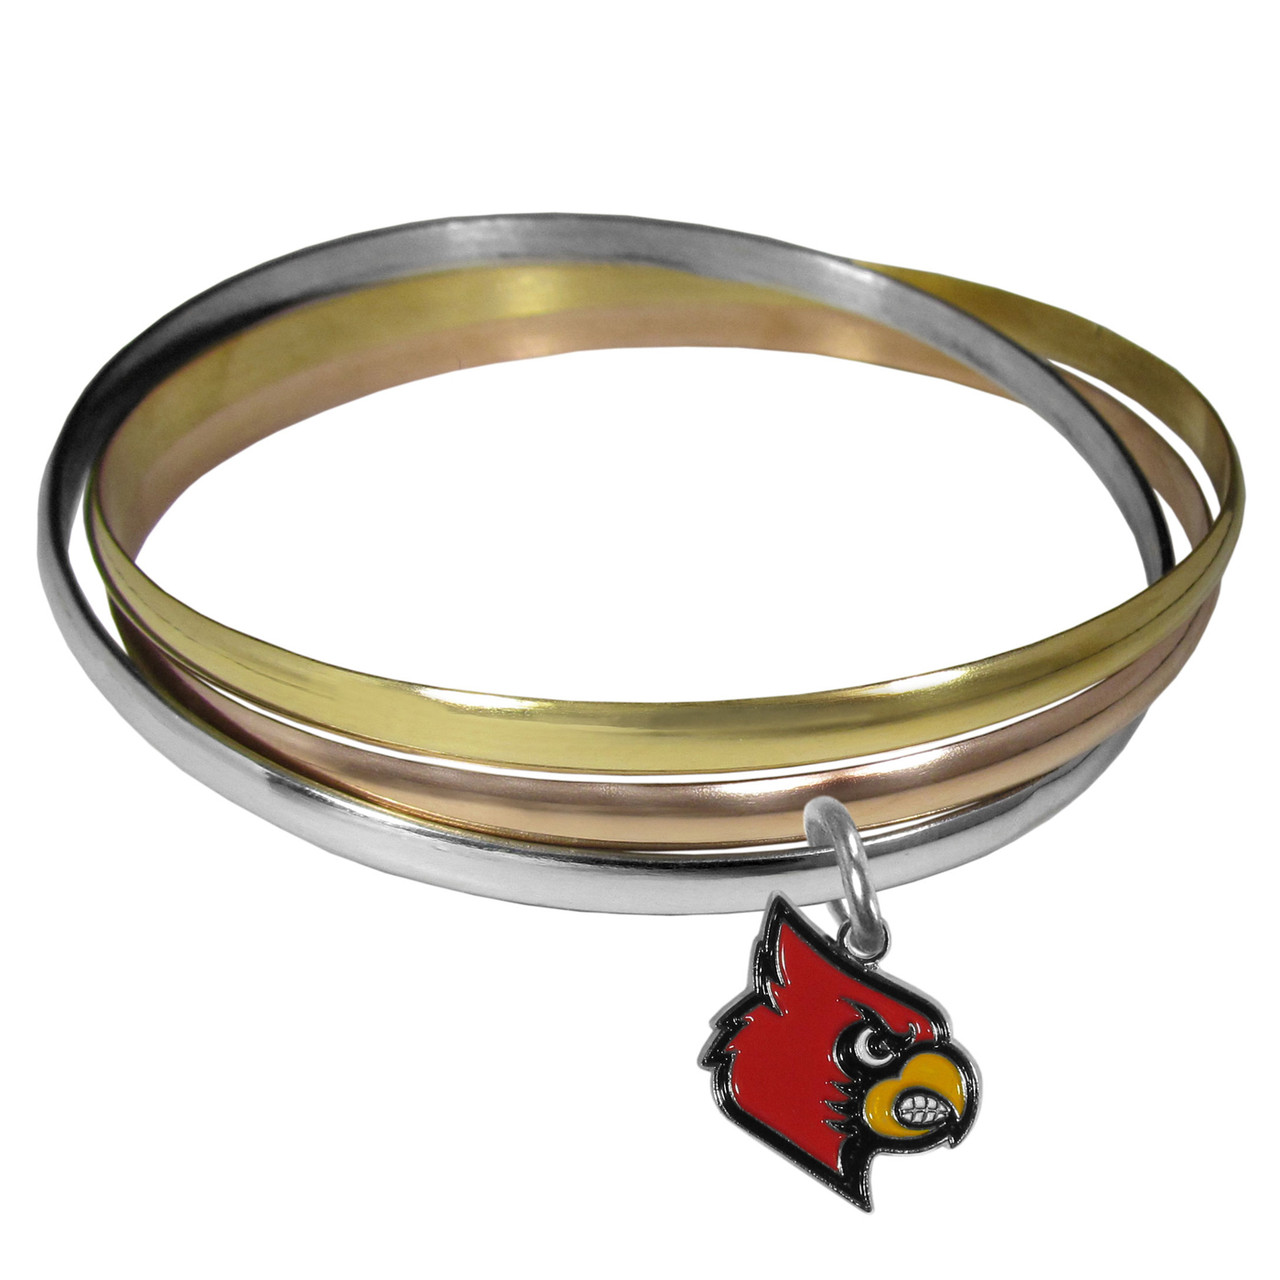 Gold Louisville Cardinals Charm Bracelet